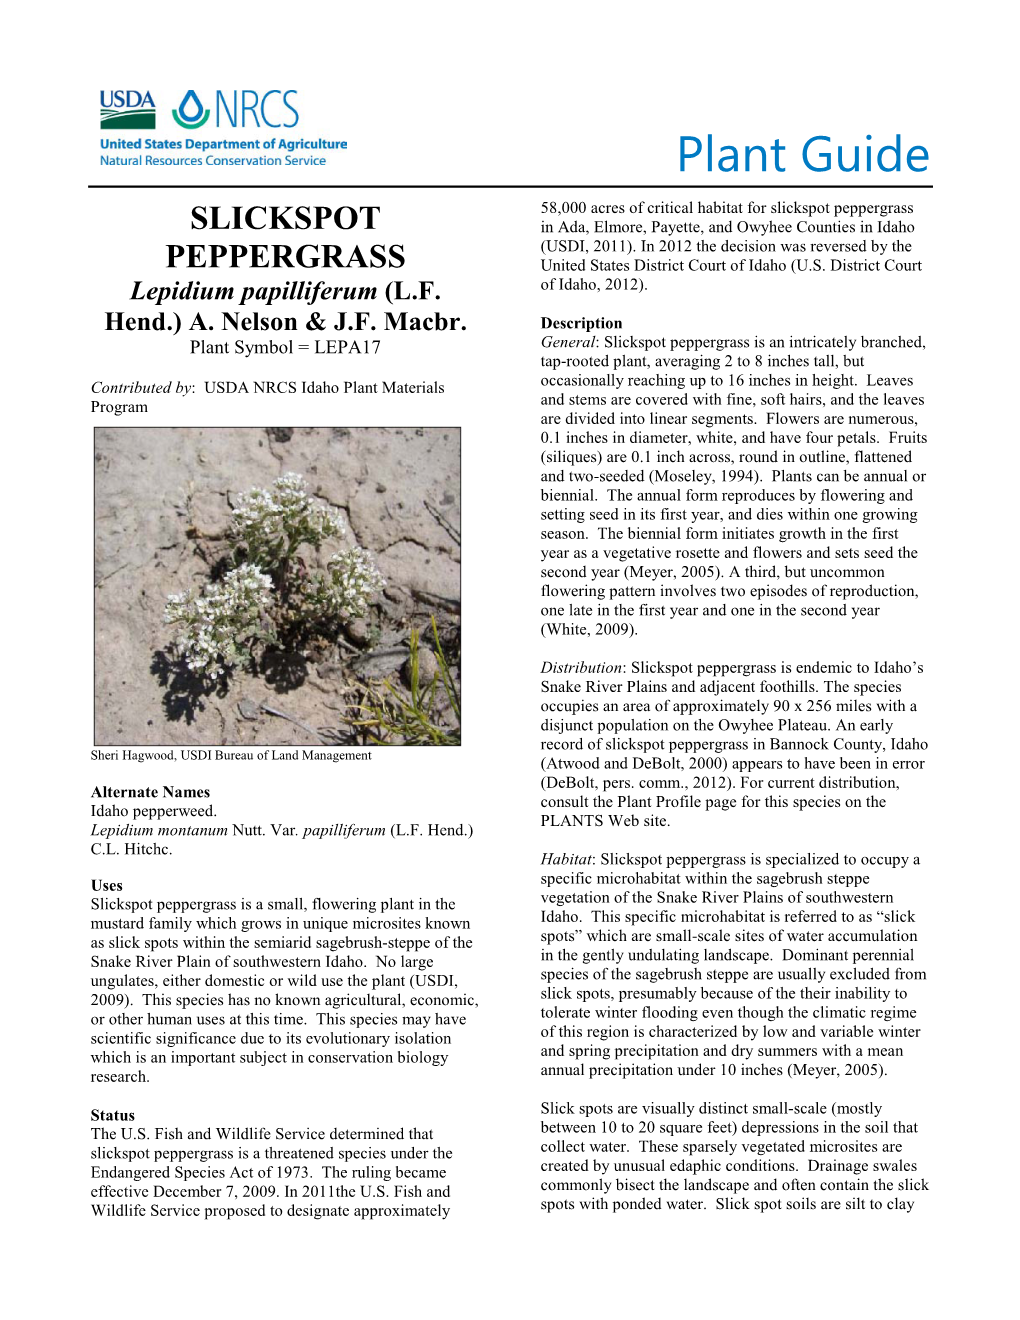 Plant Guide for Slickspot Peppergrass (Lepidium Papilliferum)